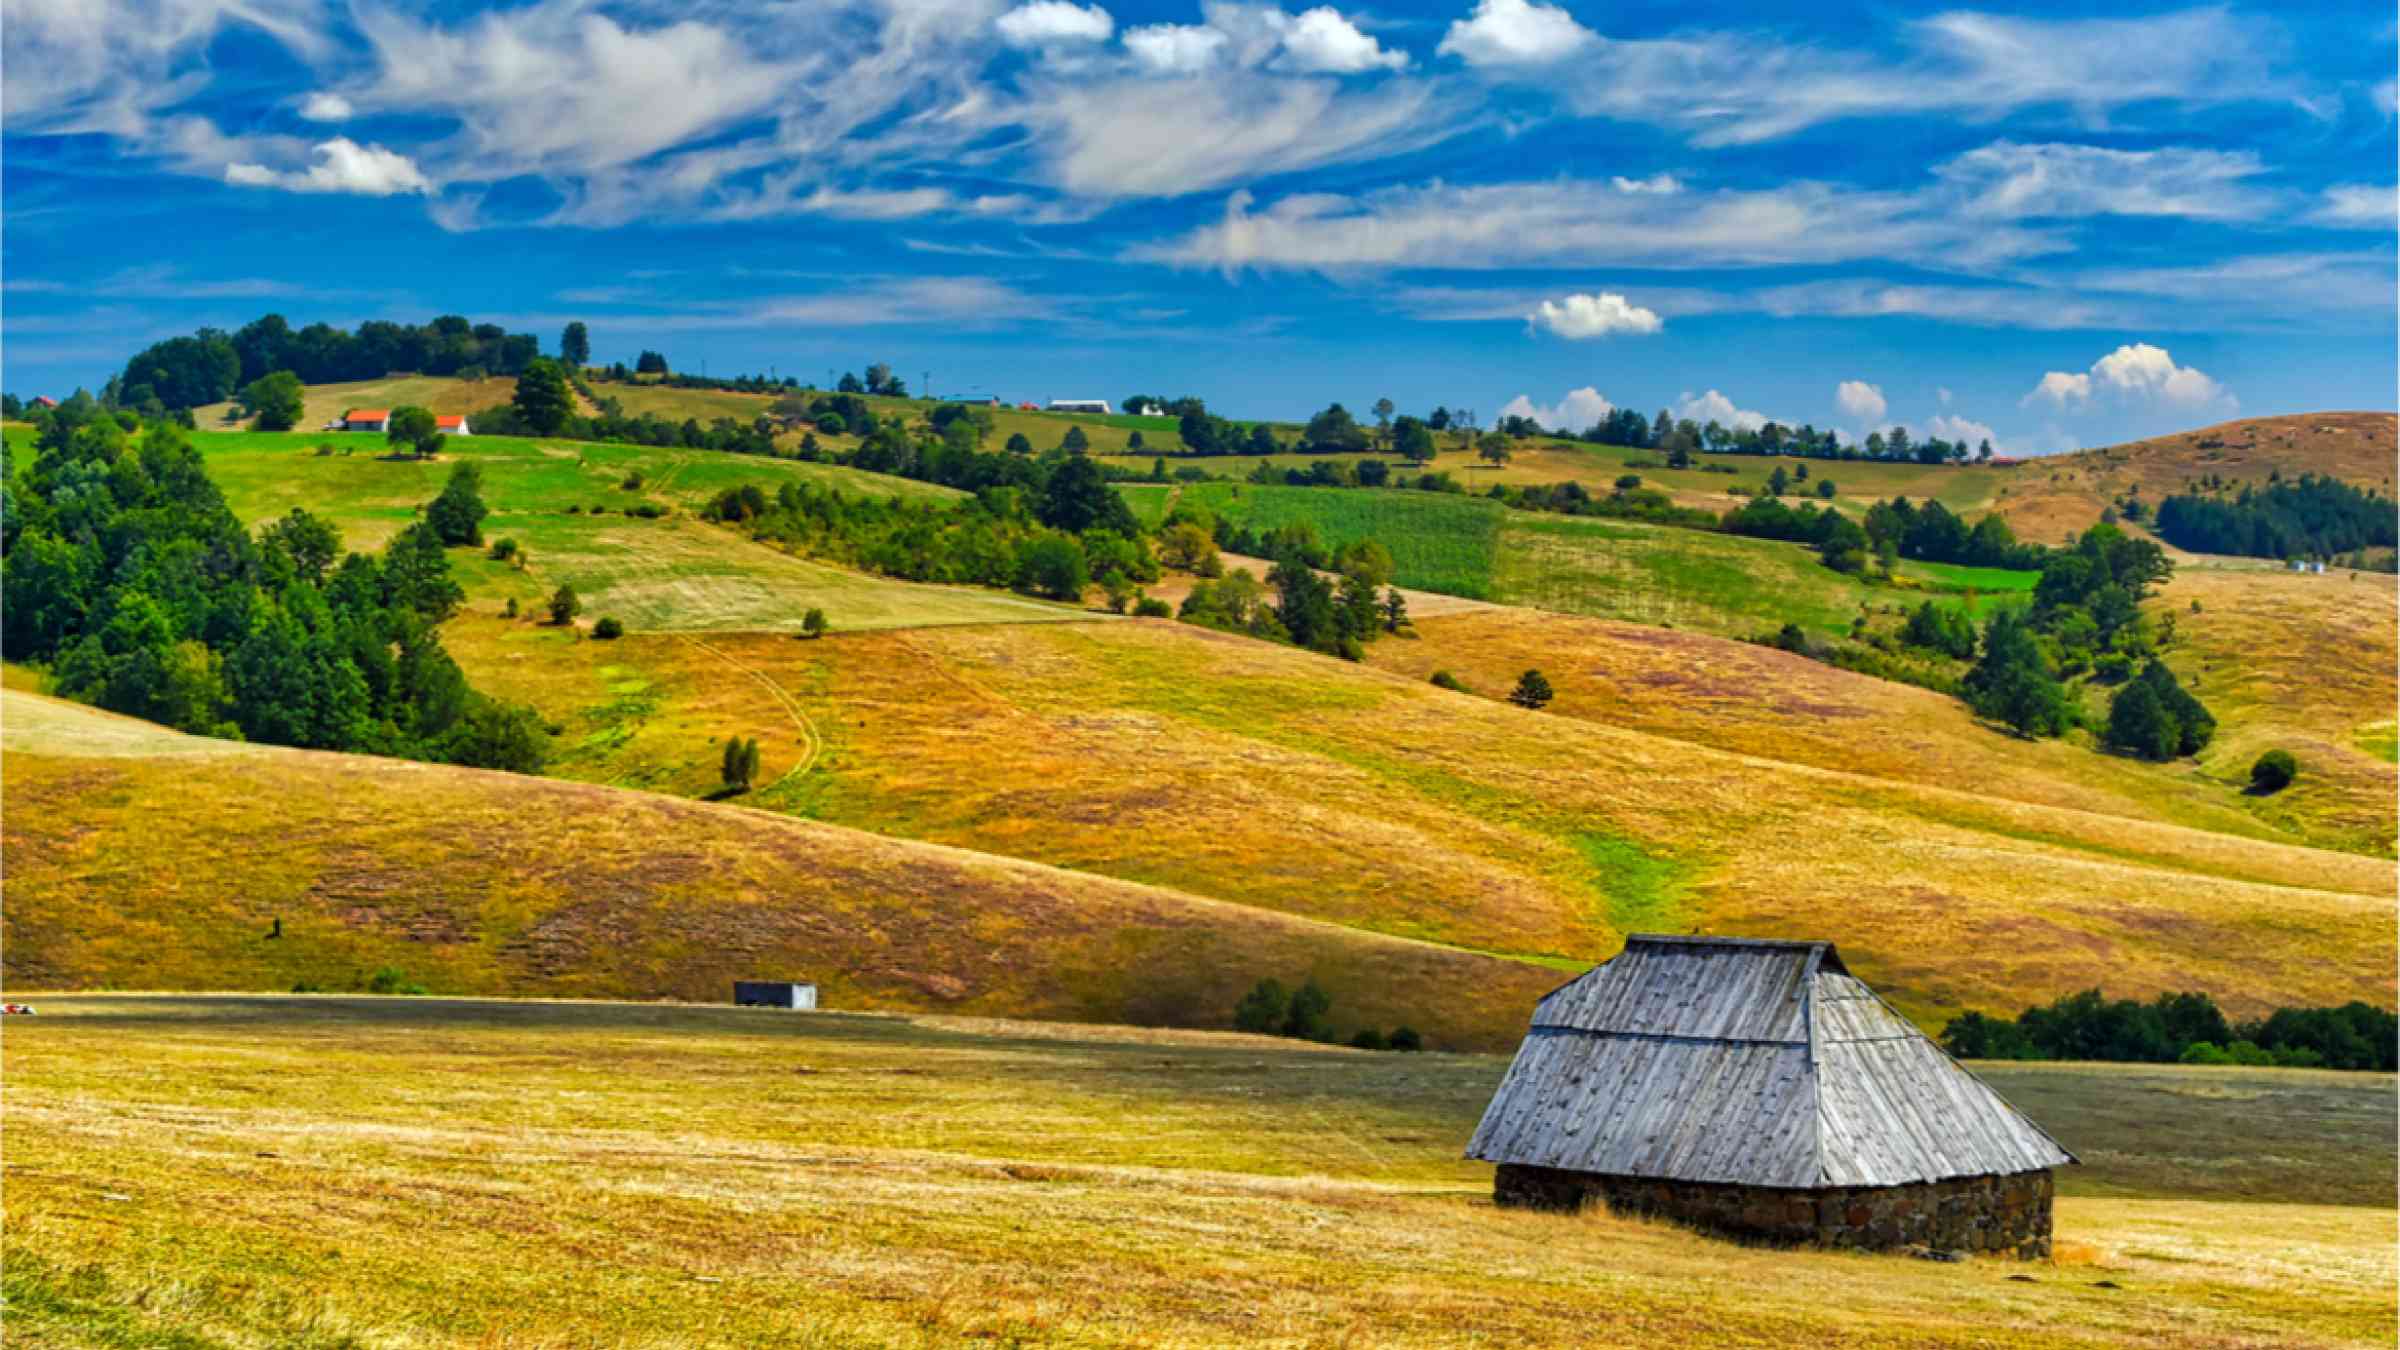 A farm house on hilly farm land in Serbia.